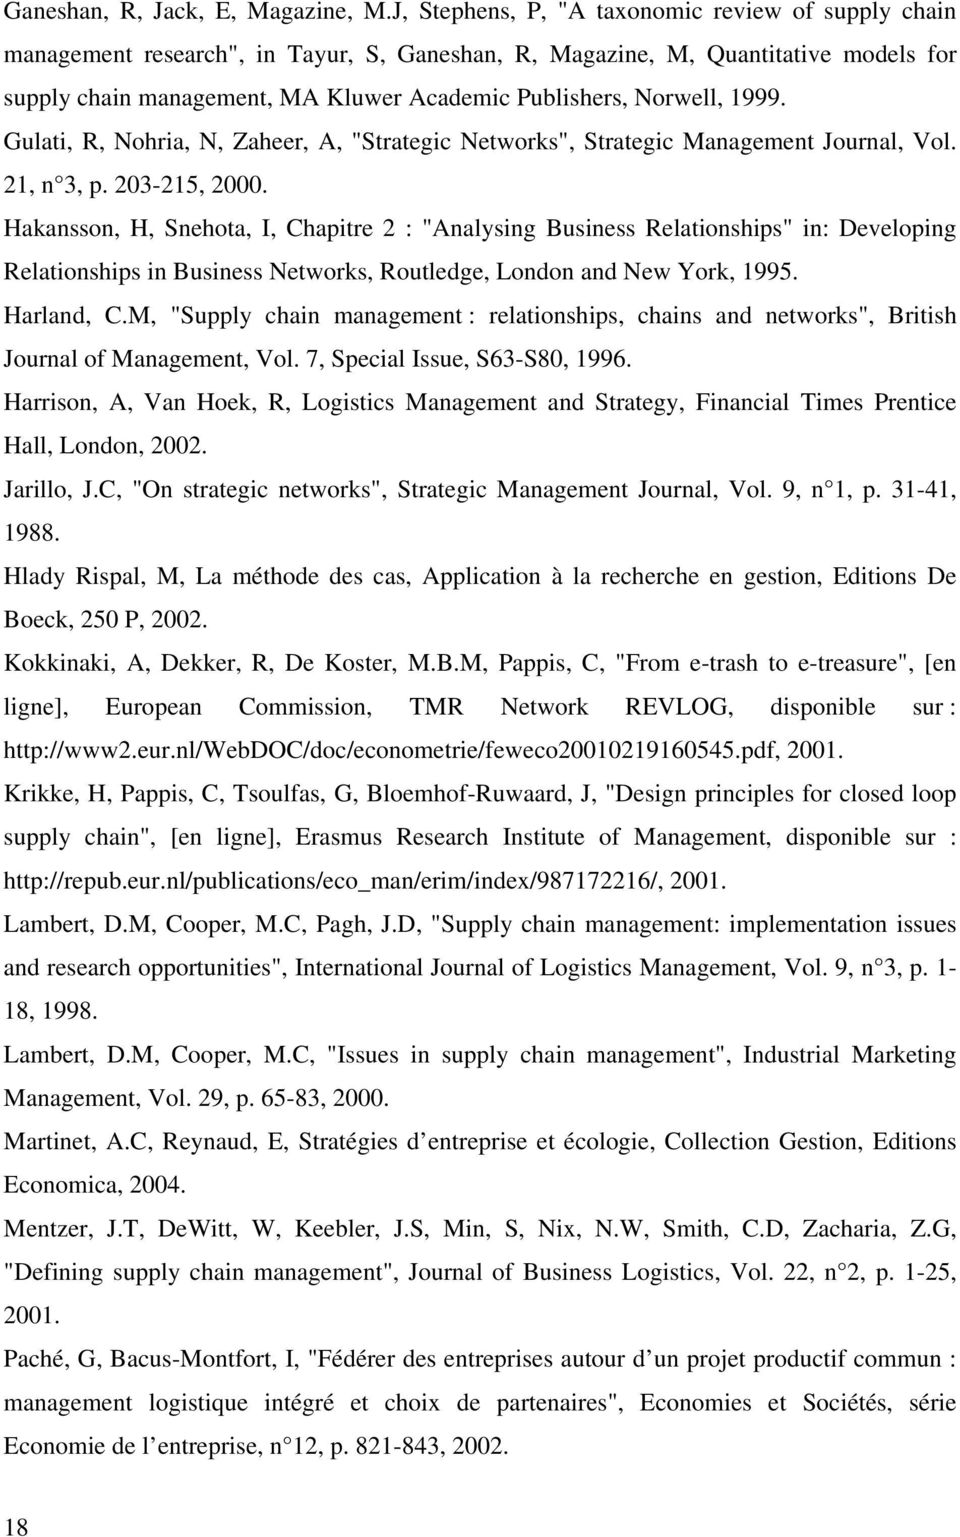 Norwell, 1999. Gulati, R, Nohria, N, Zaheer, A, "Strategic Networks", Strategic Management Journal, Vol. 21, n 3, p. 203-215, 2000.